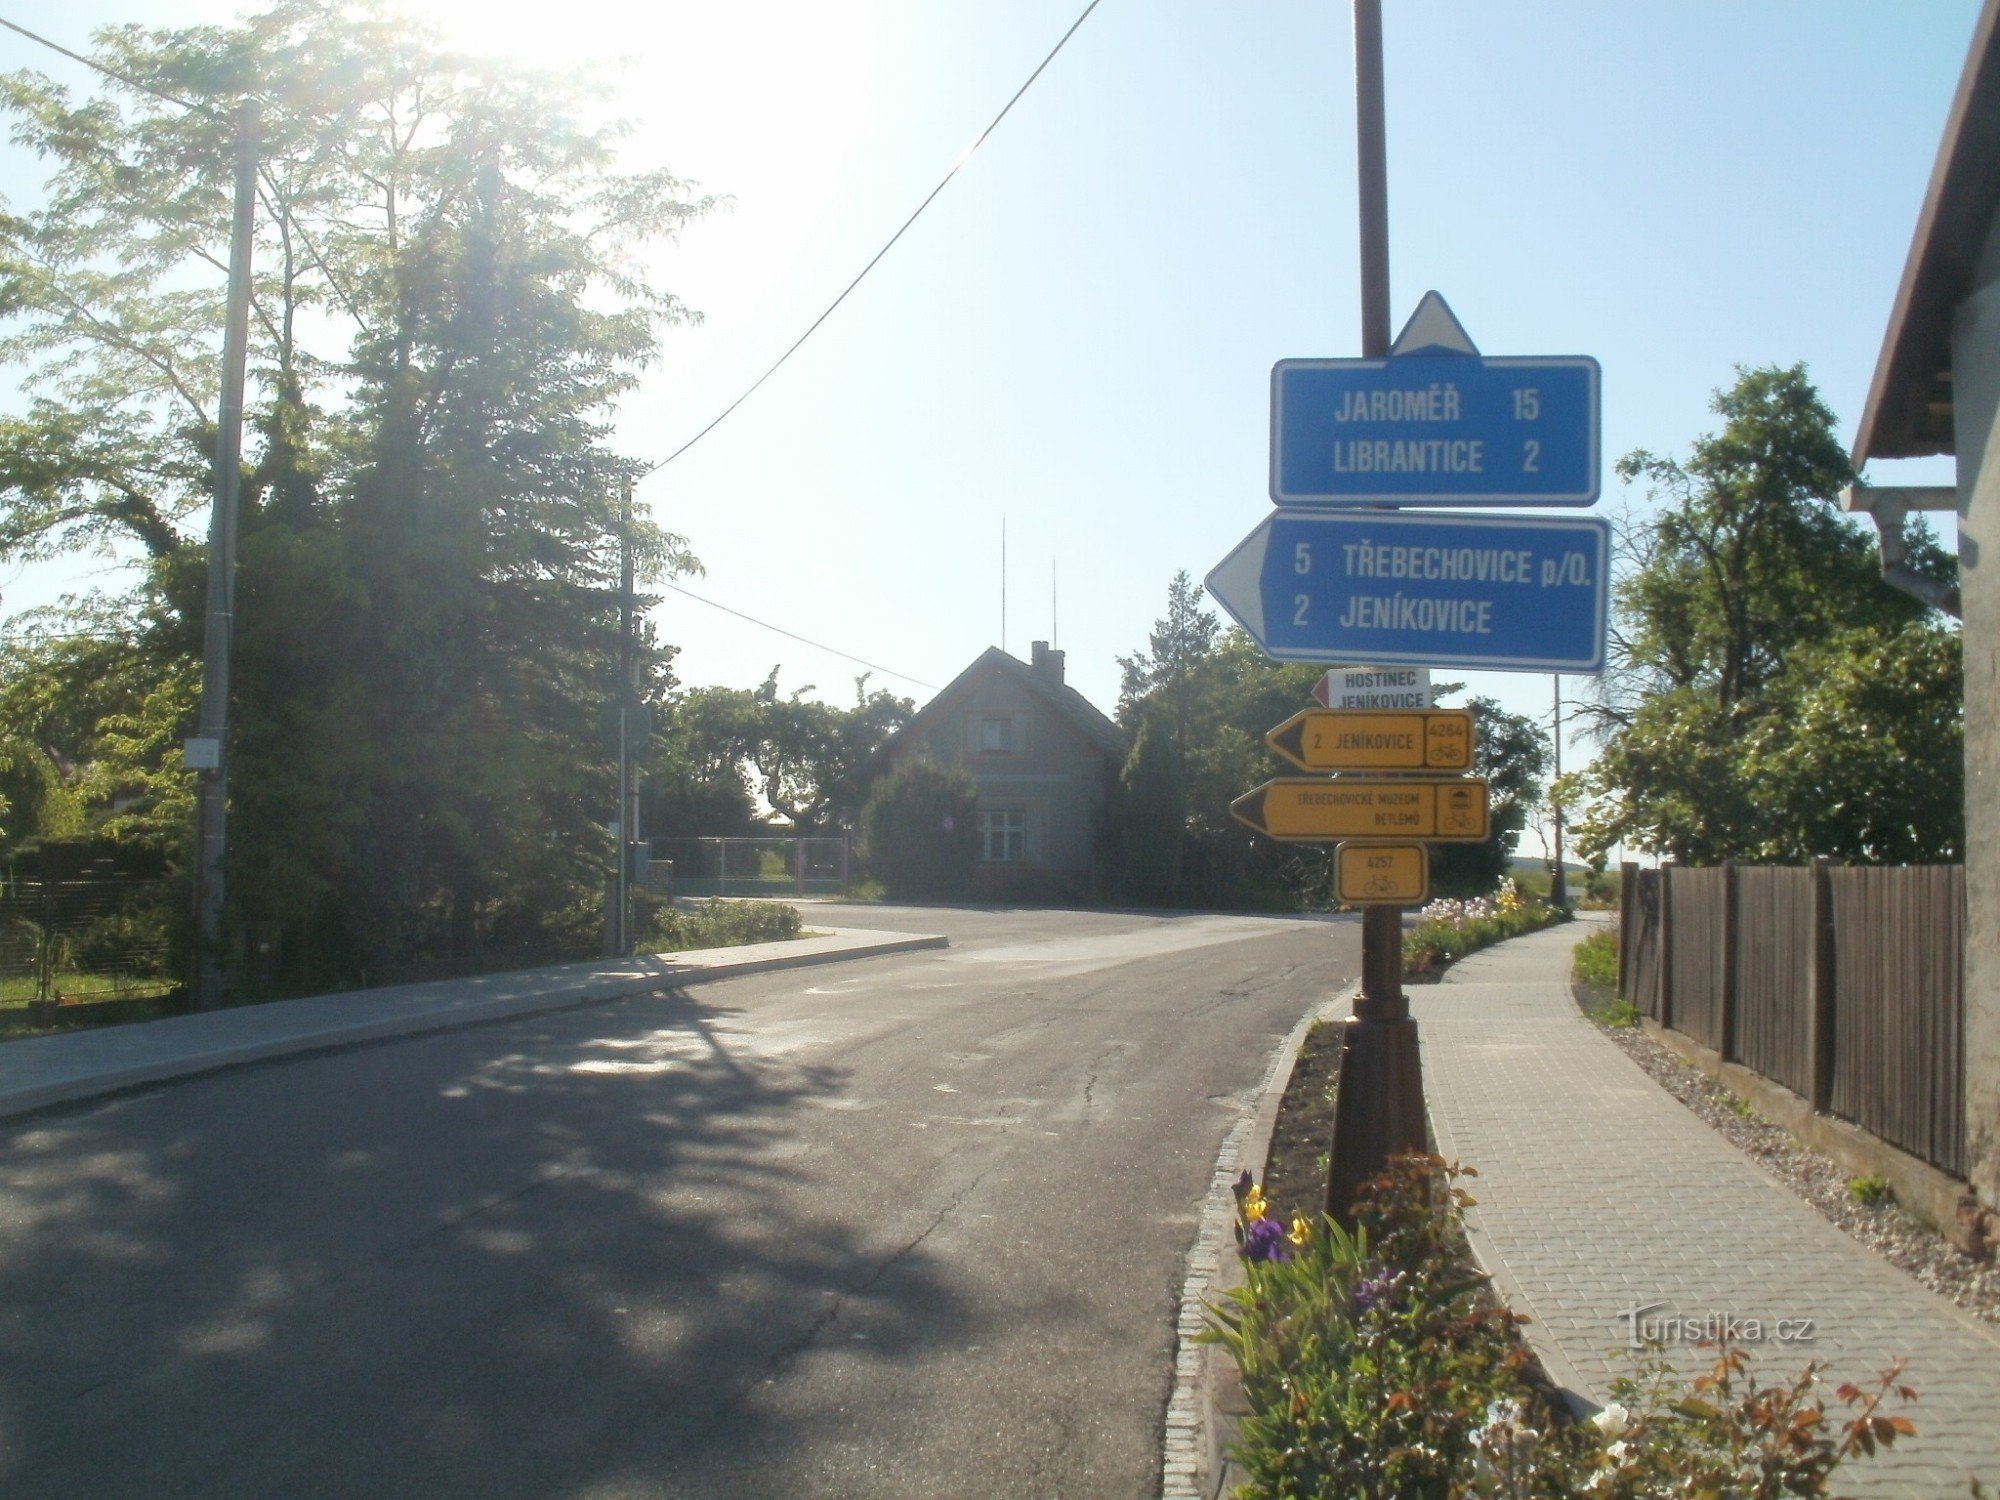 encruzilhada cicloturística - Libníkovice, no cruzamento